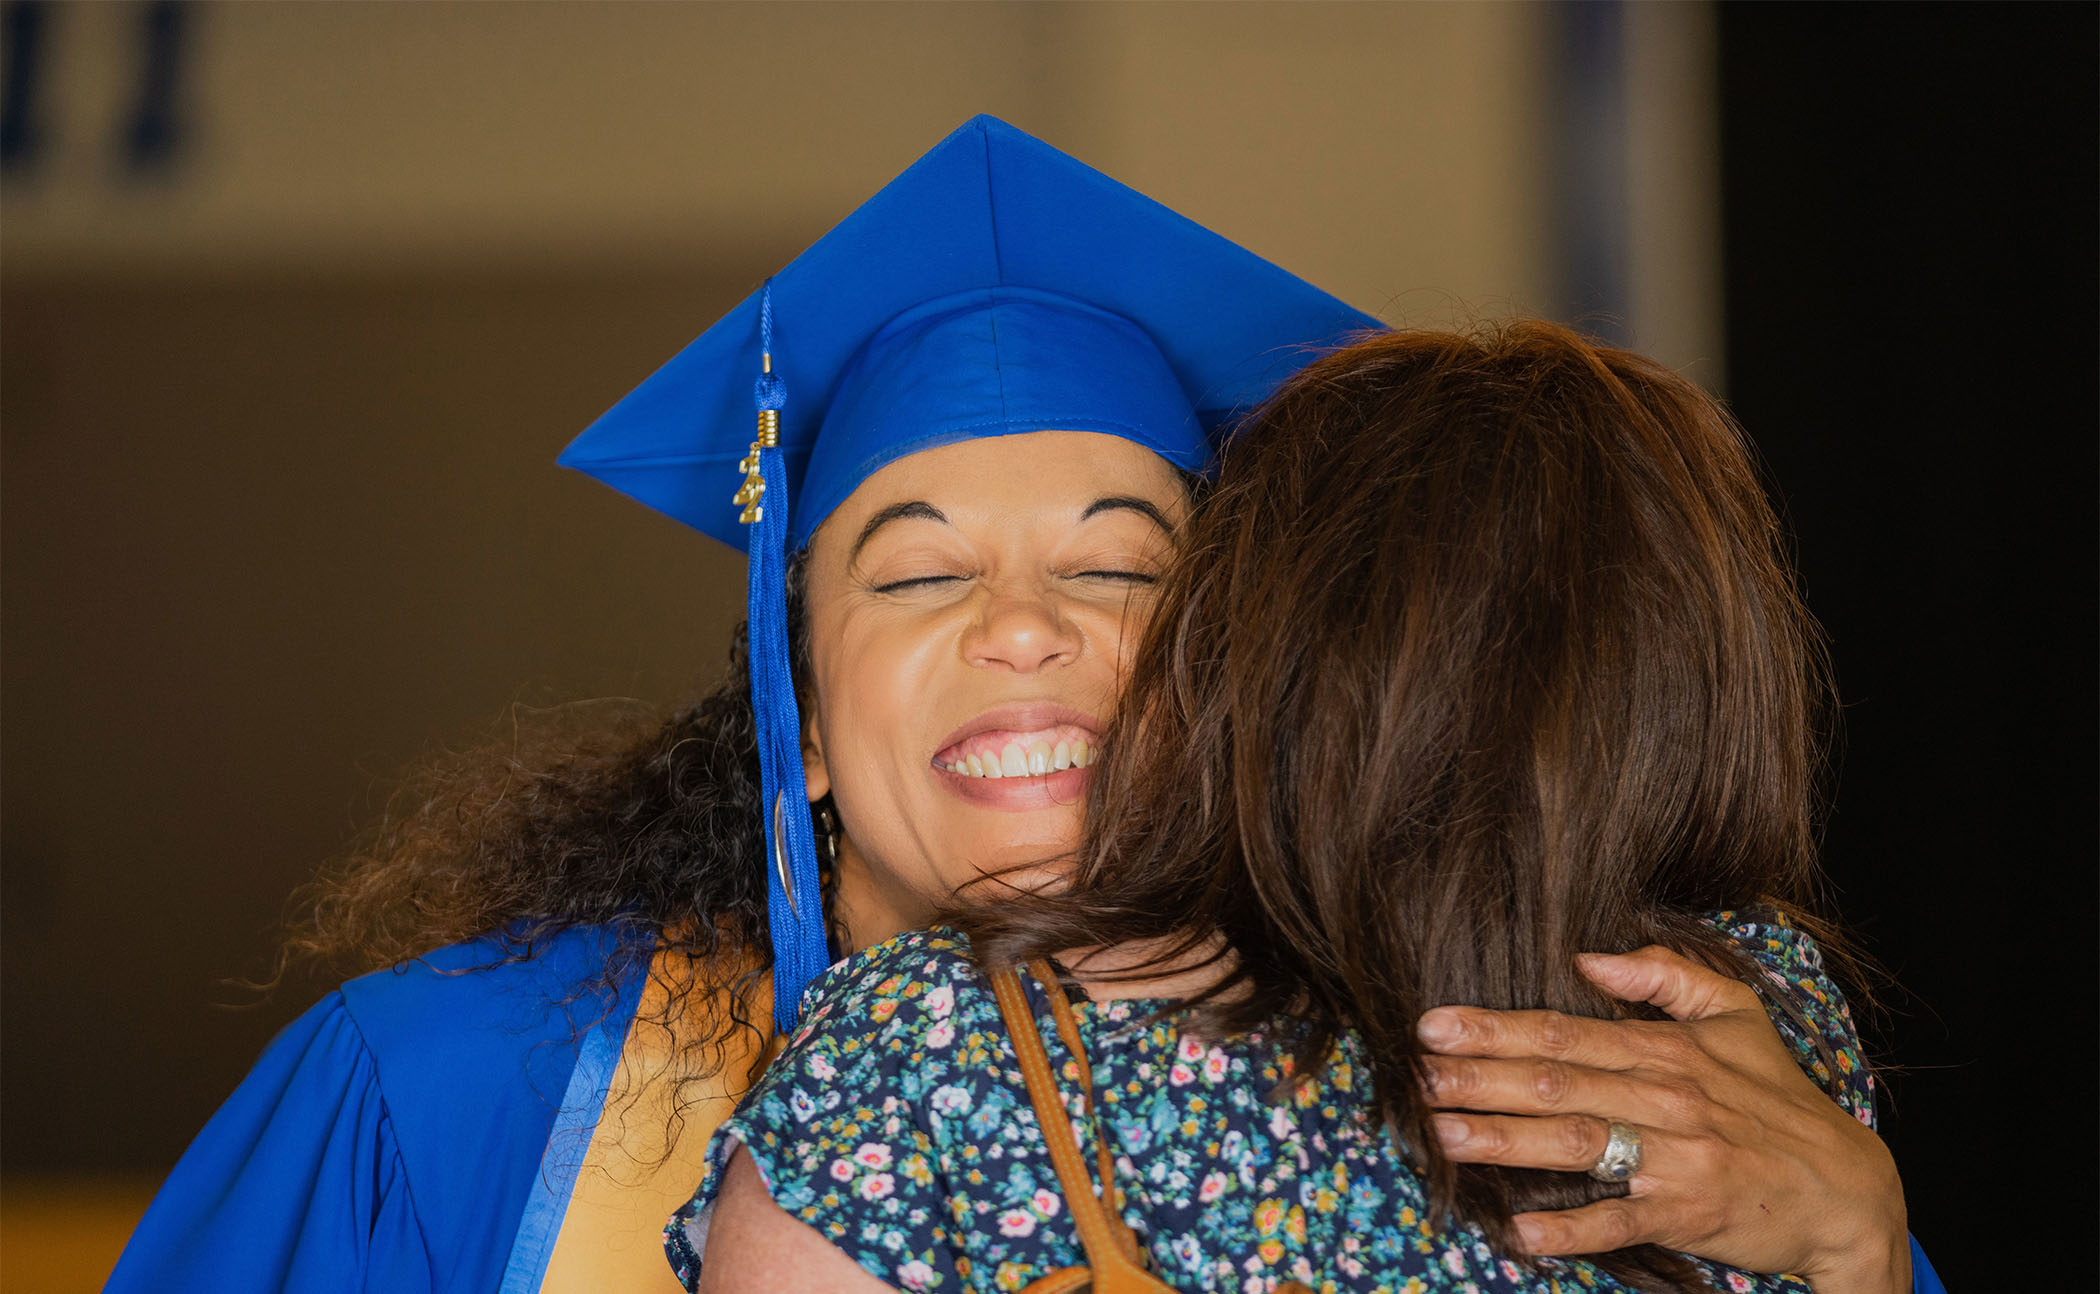 Graduate embraces family member